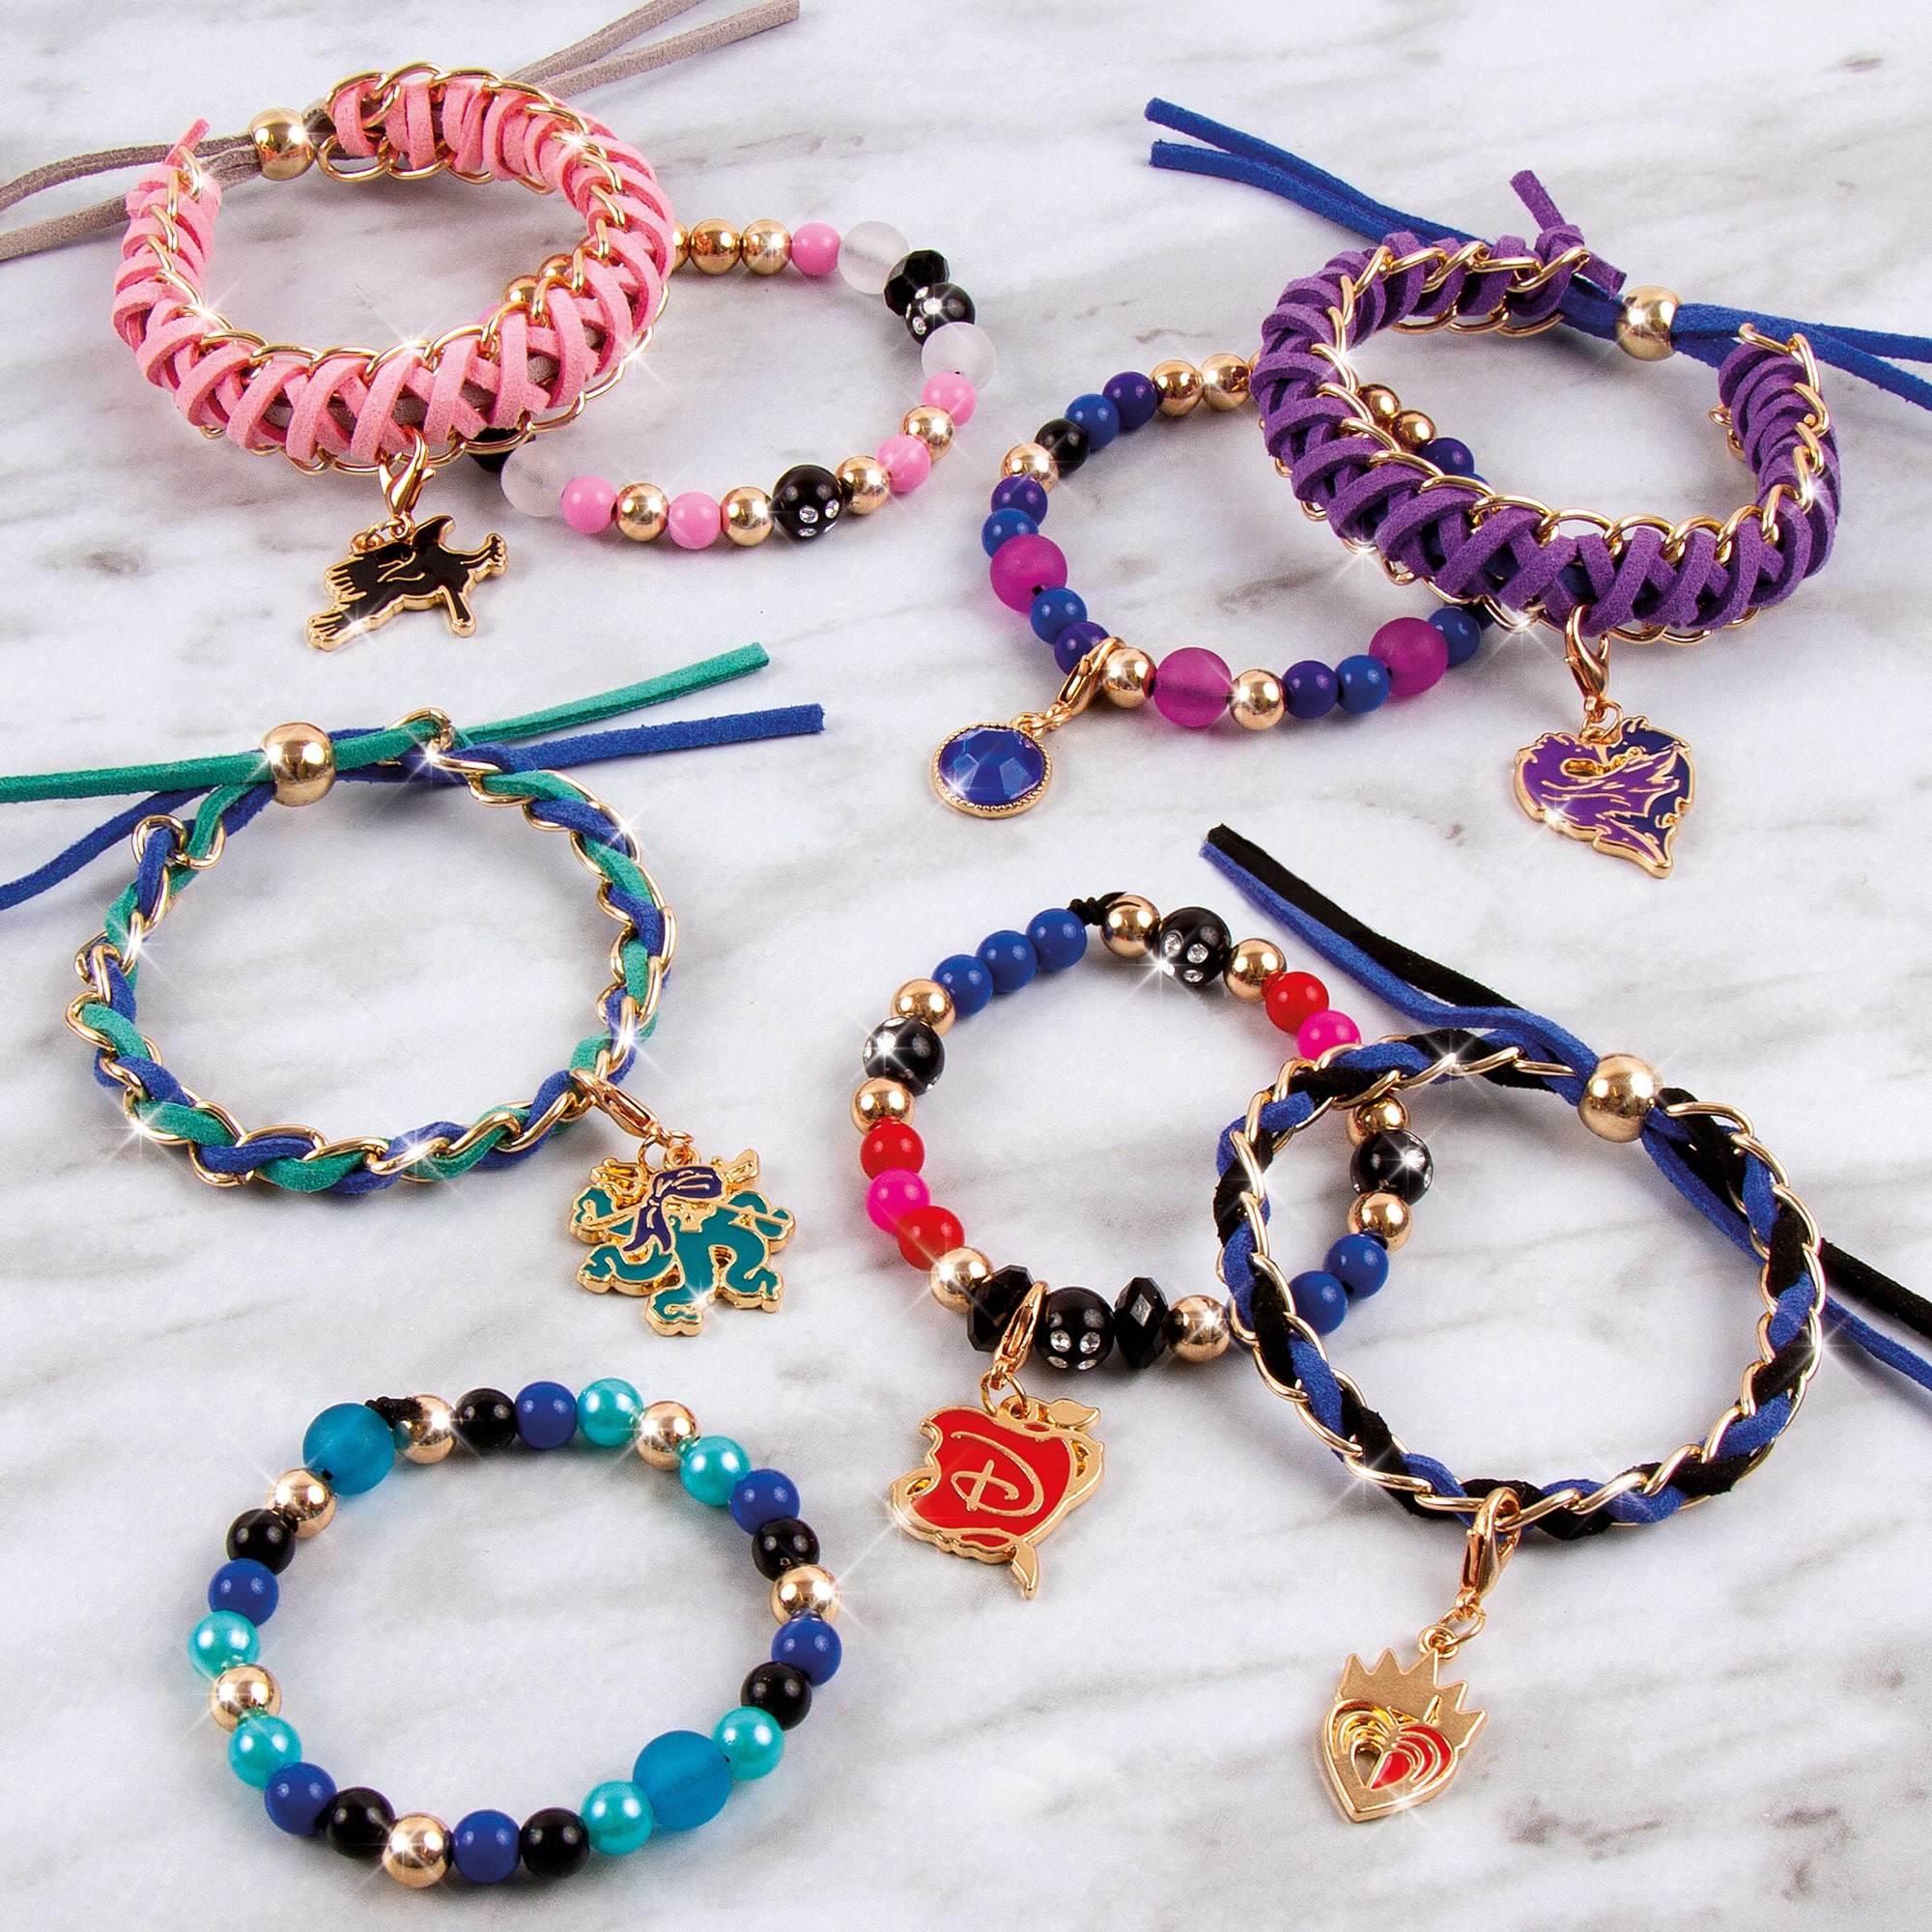 Make It Real&#x2122; Disney&#xAE; Descendants 3 Fierce Fashion Bracelets Kit